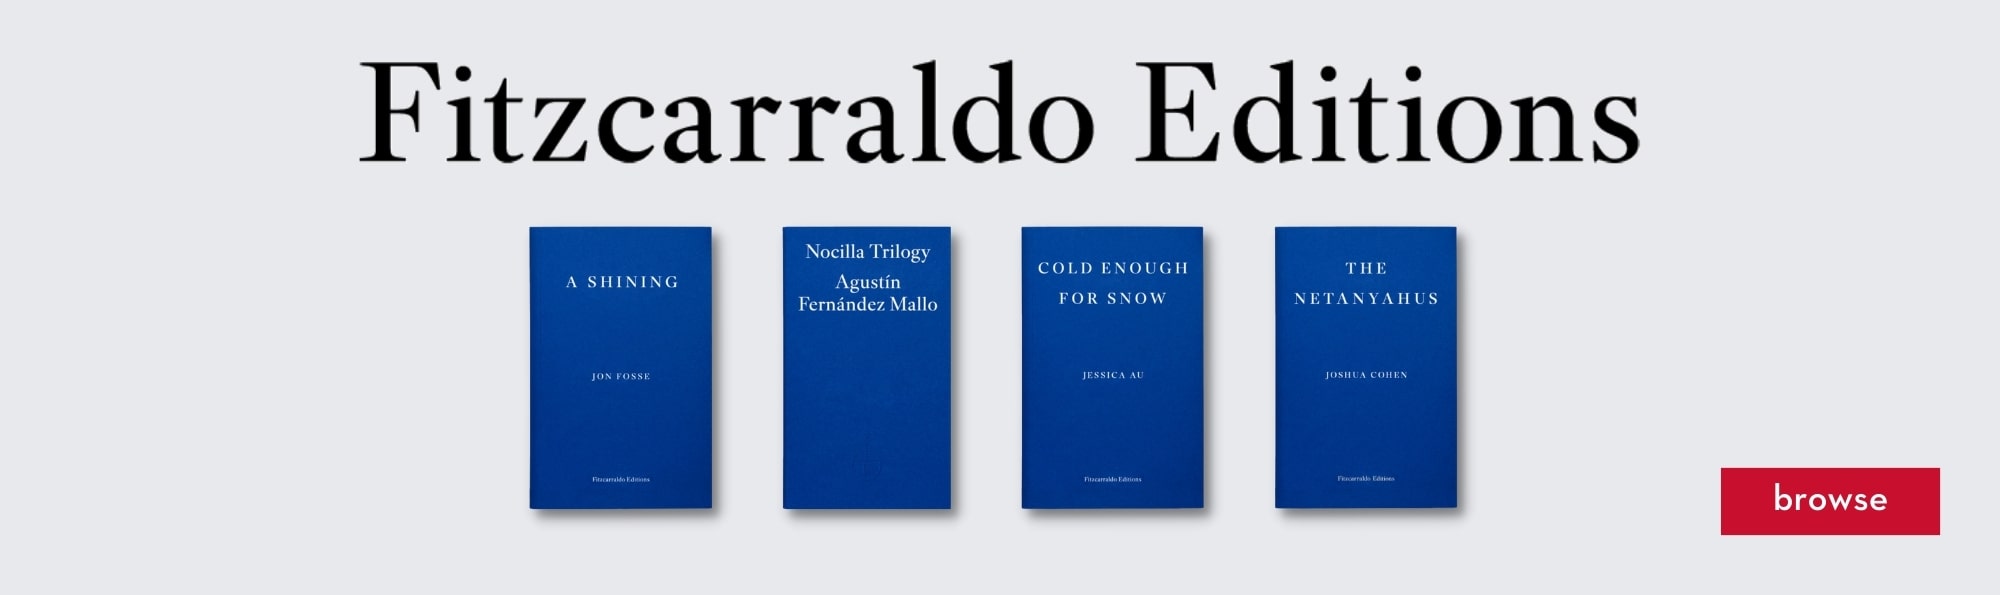 Fitzcarraldo editions